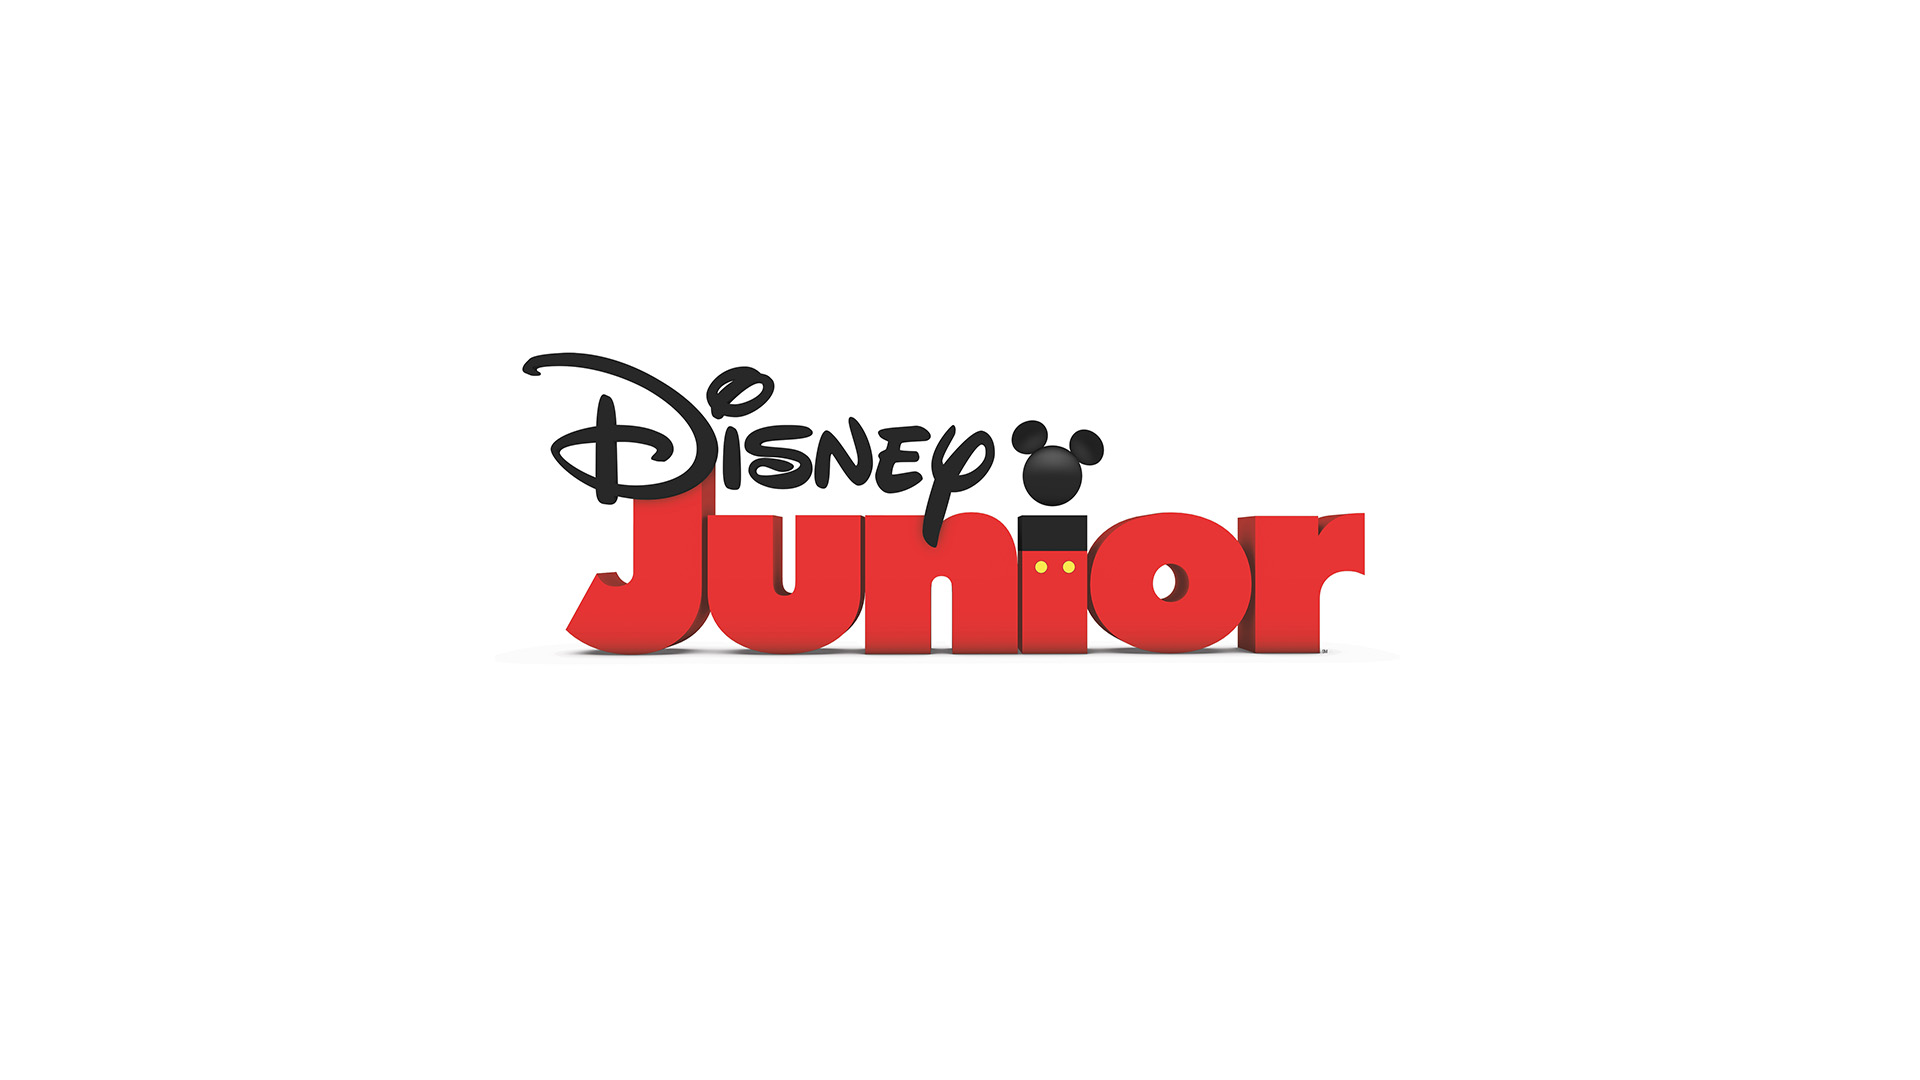 https://thewaltdisneycompany.com/app/uploads/2021/02/021221_Disney-Junior-10th-Anniversary-00.jpg